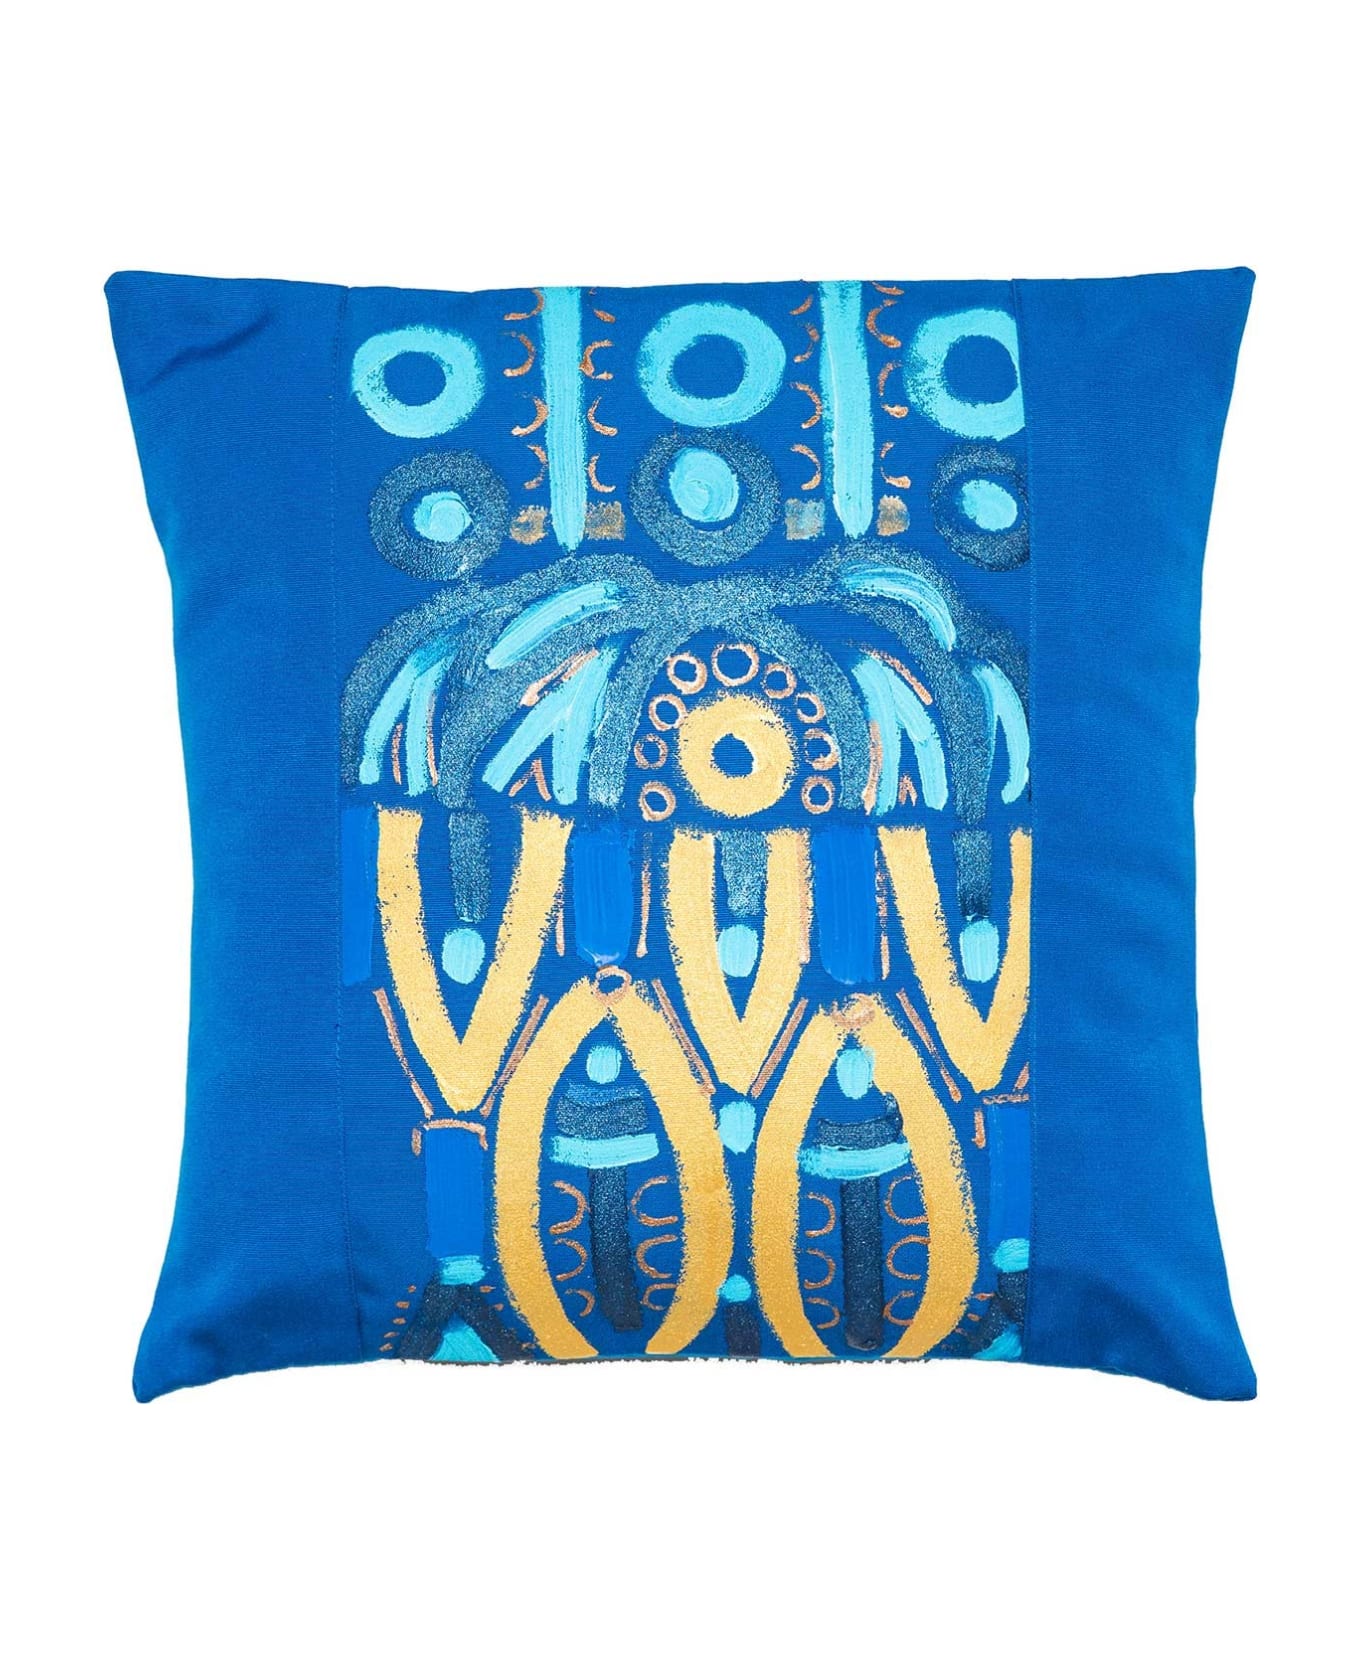 Le Botteghe su Gologone Acrylic Hand Painted Outdoor Cushion 40x40 cm - Blue Fantasy